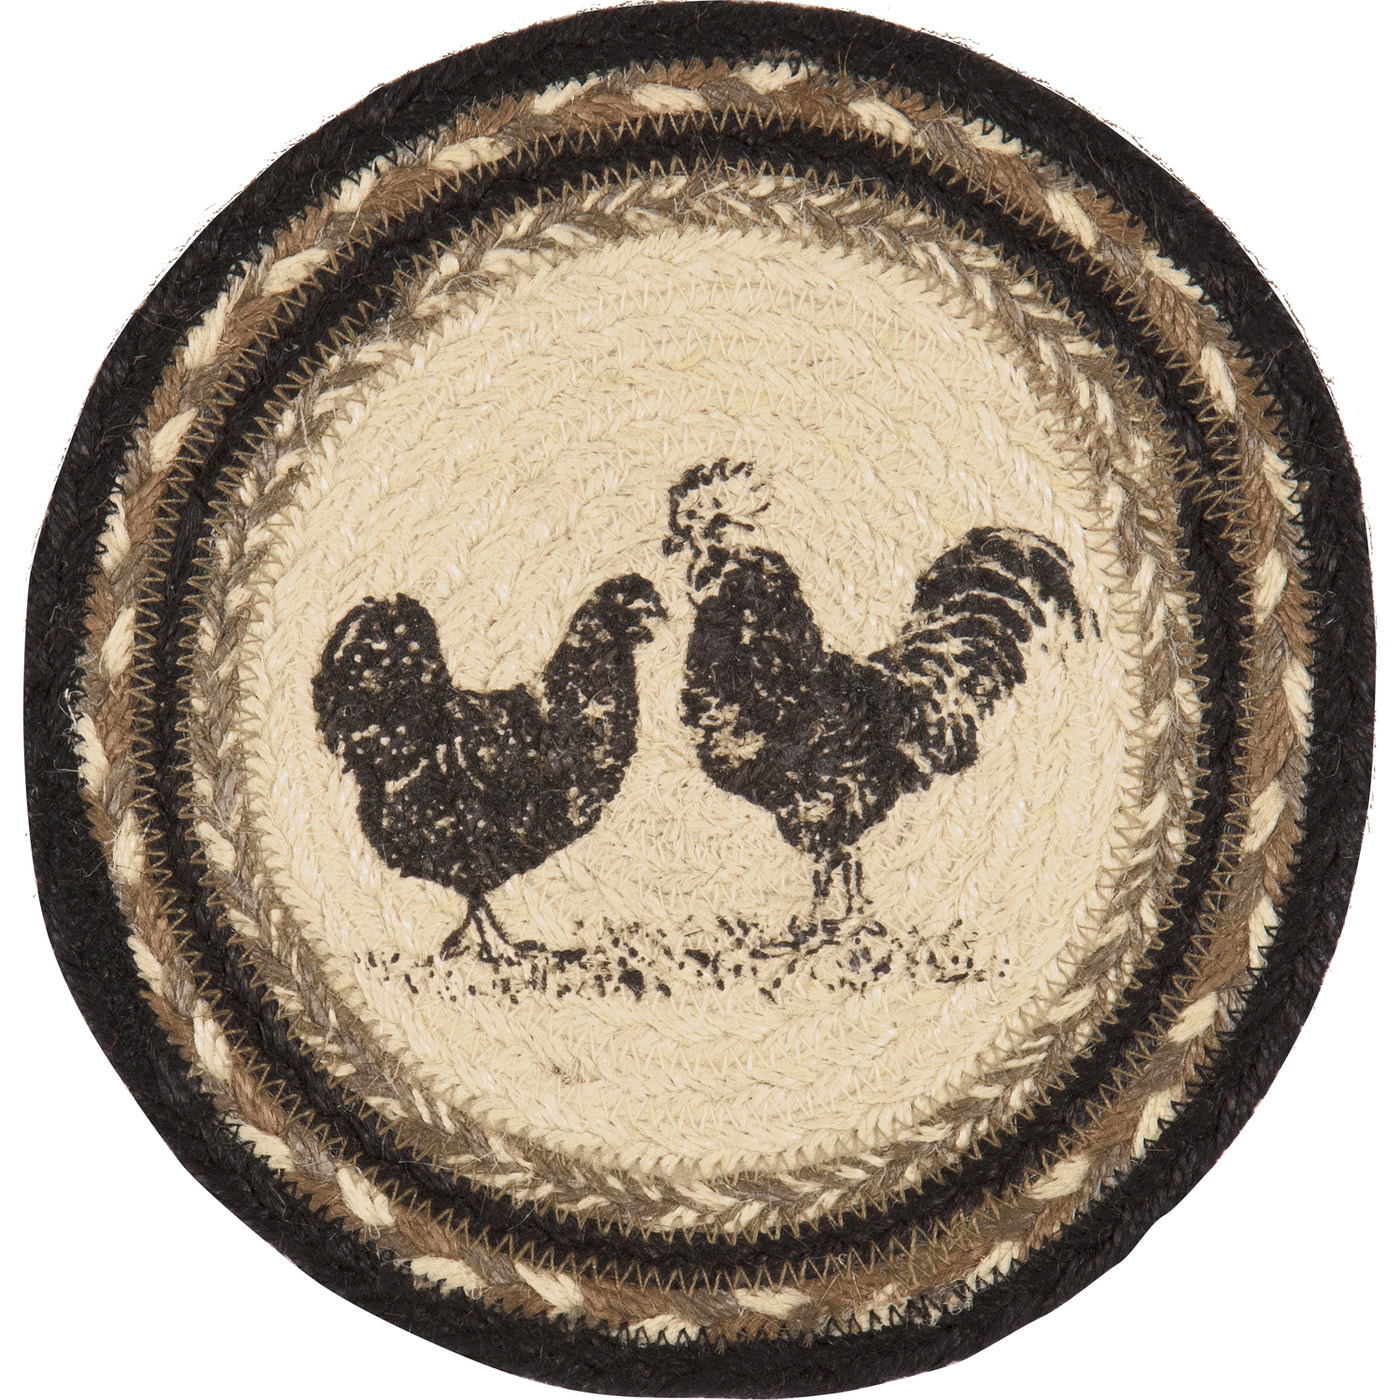 Sawyer Mill Charcoal Poultry Jute Trivet 8" Diameter